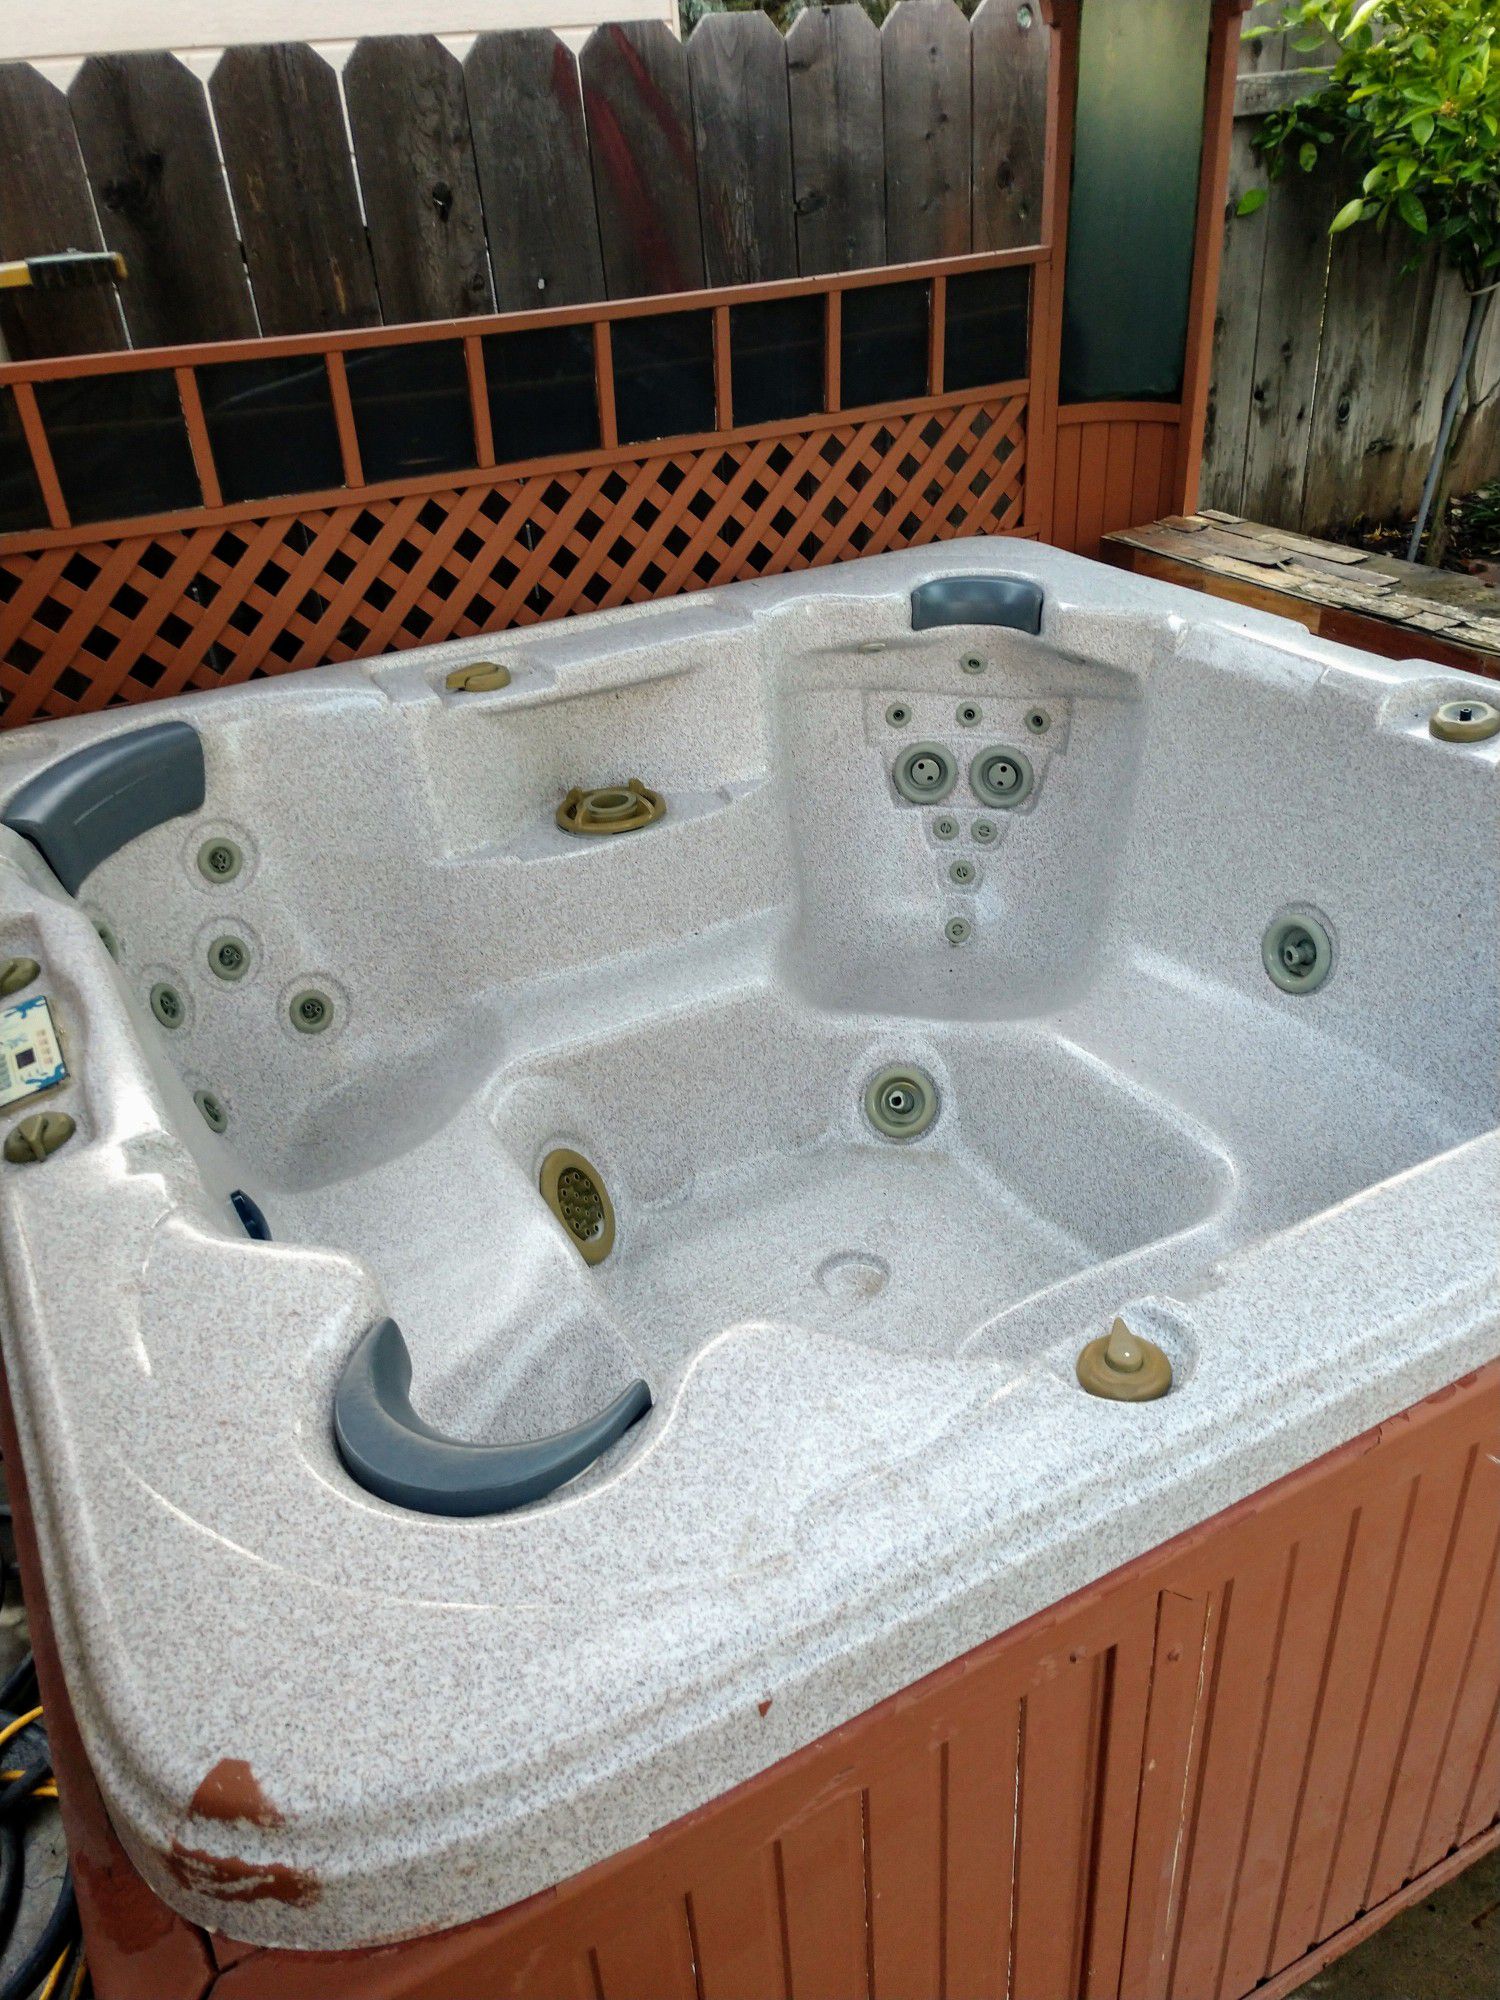 Spa, jacuzzi, hot tub